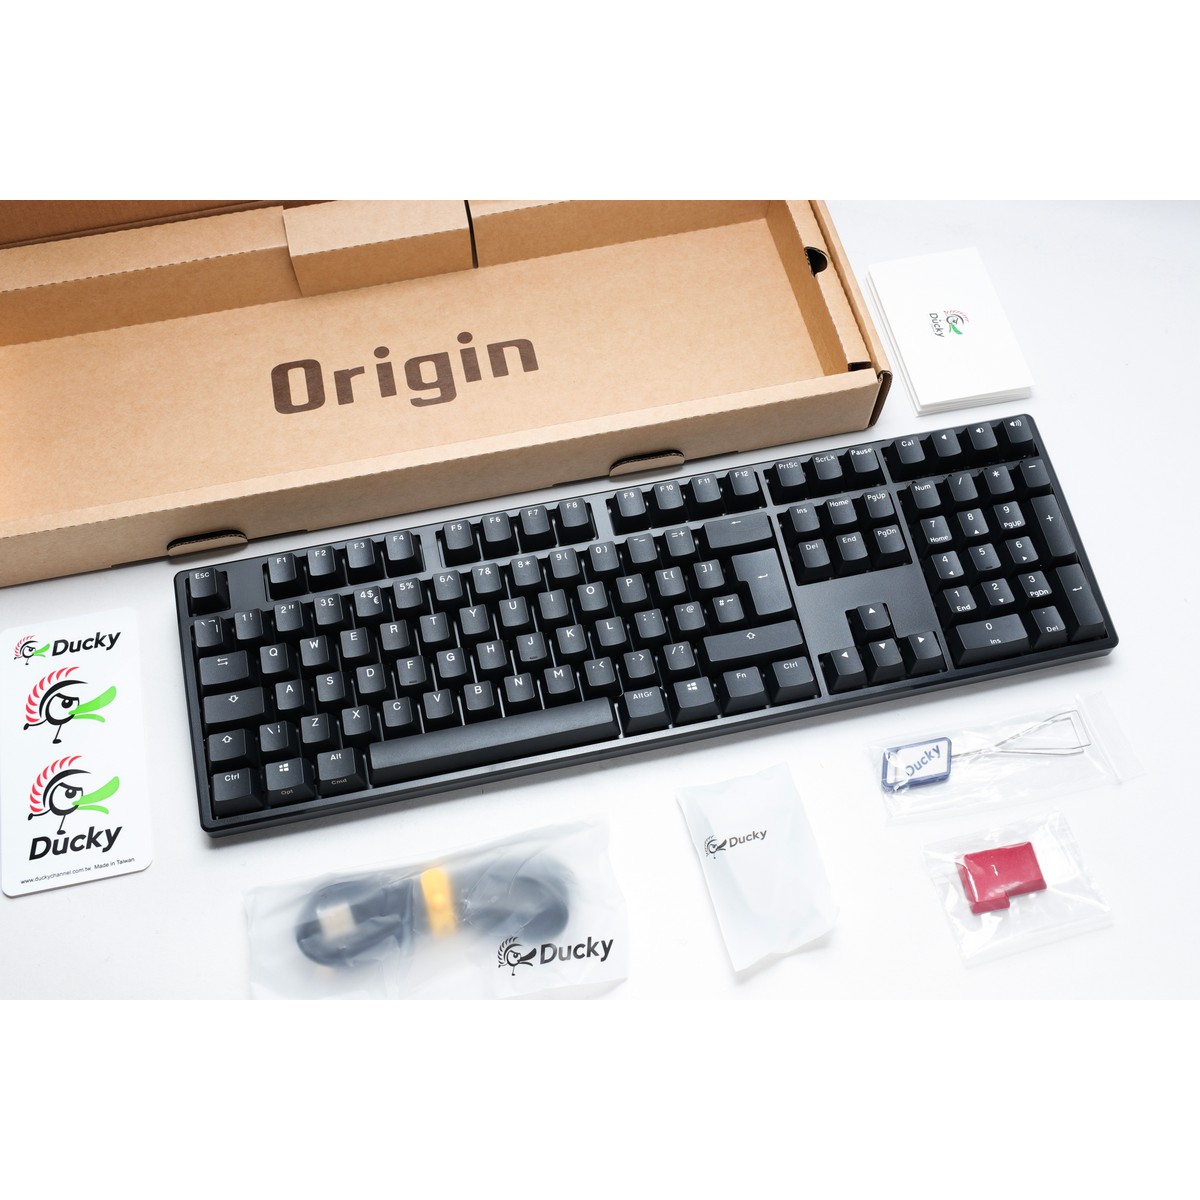 Ducky - Ducky Origin USB Mechanical Gaming Keyboard Cherry MX Brown - Black UK Layout